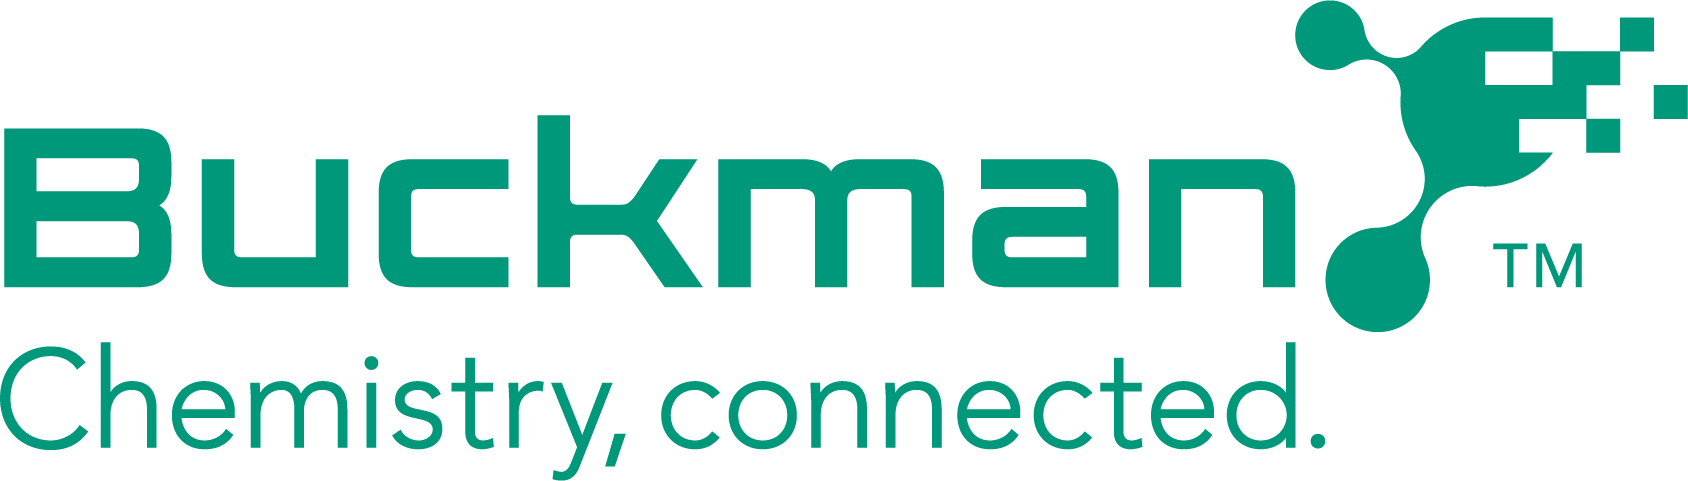 Buckman Logo Preferred GREEN